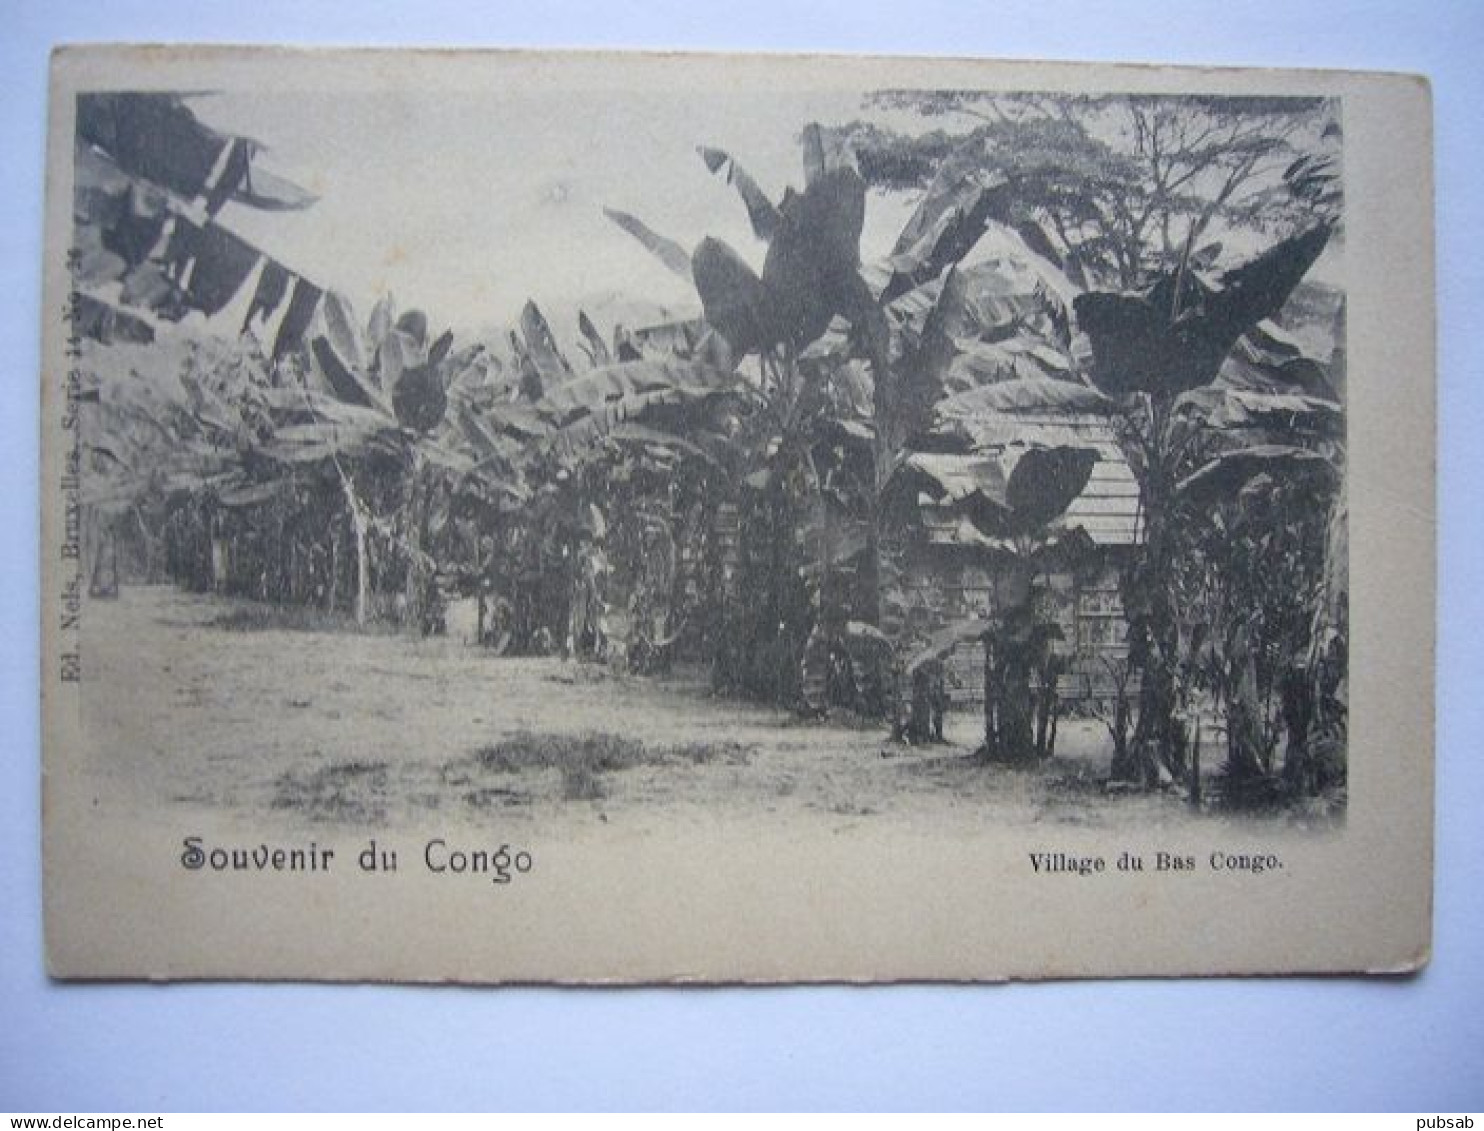 Village Du Bas Congo - Belgian Congo